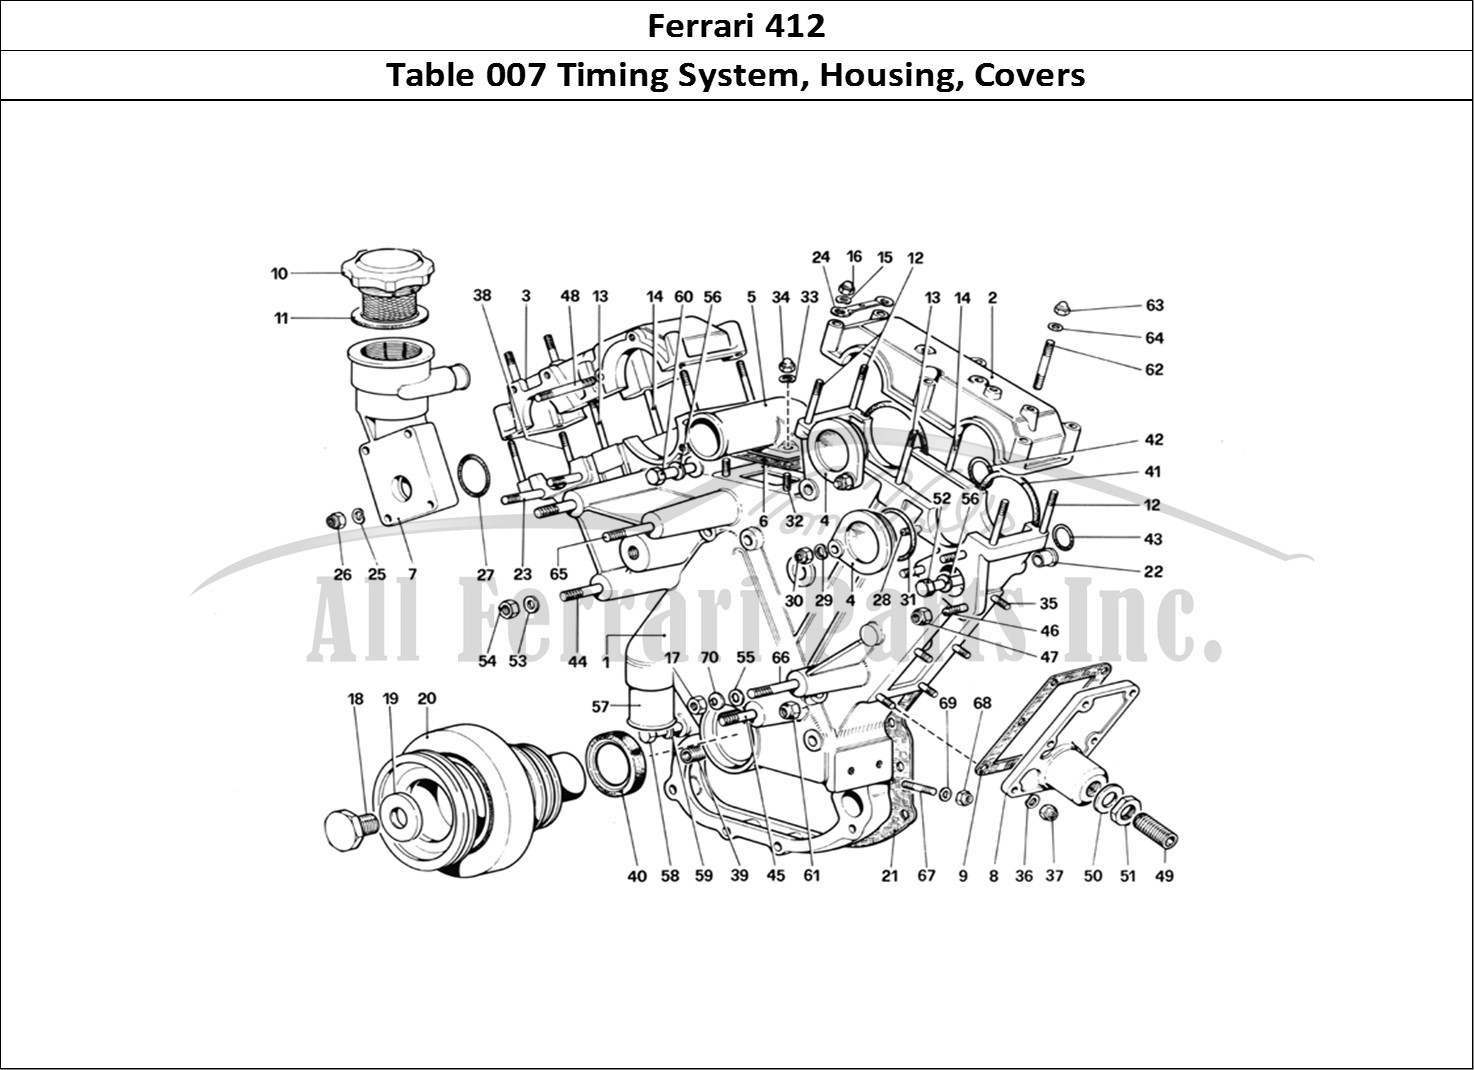 Ferrari Parts Ferrari 412 (Mechanical) Page 007 Timing System - Housing a